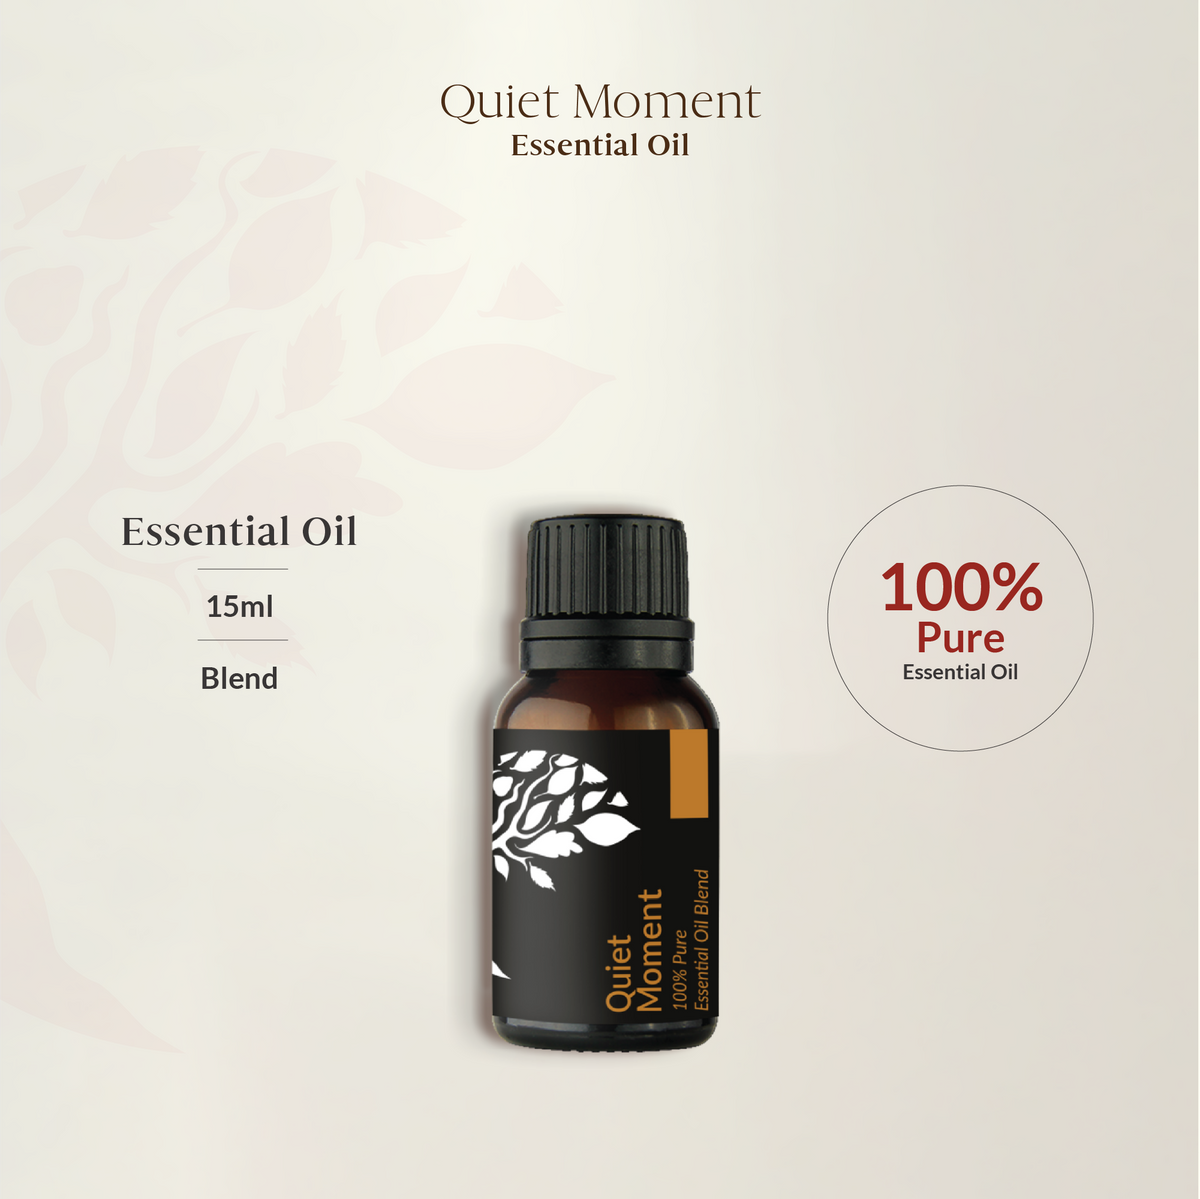 Quiet Moment Essential Oil Blend 15ml